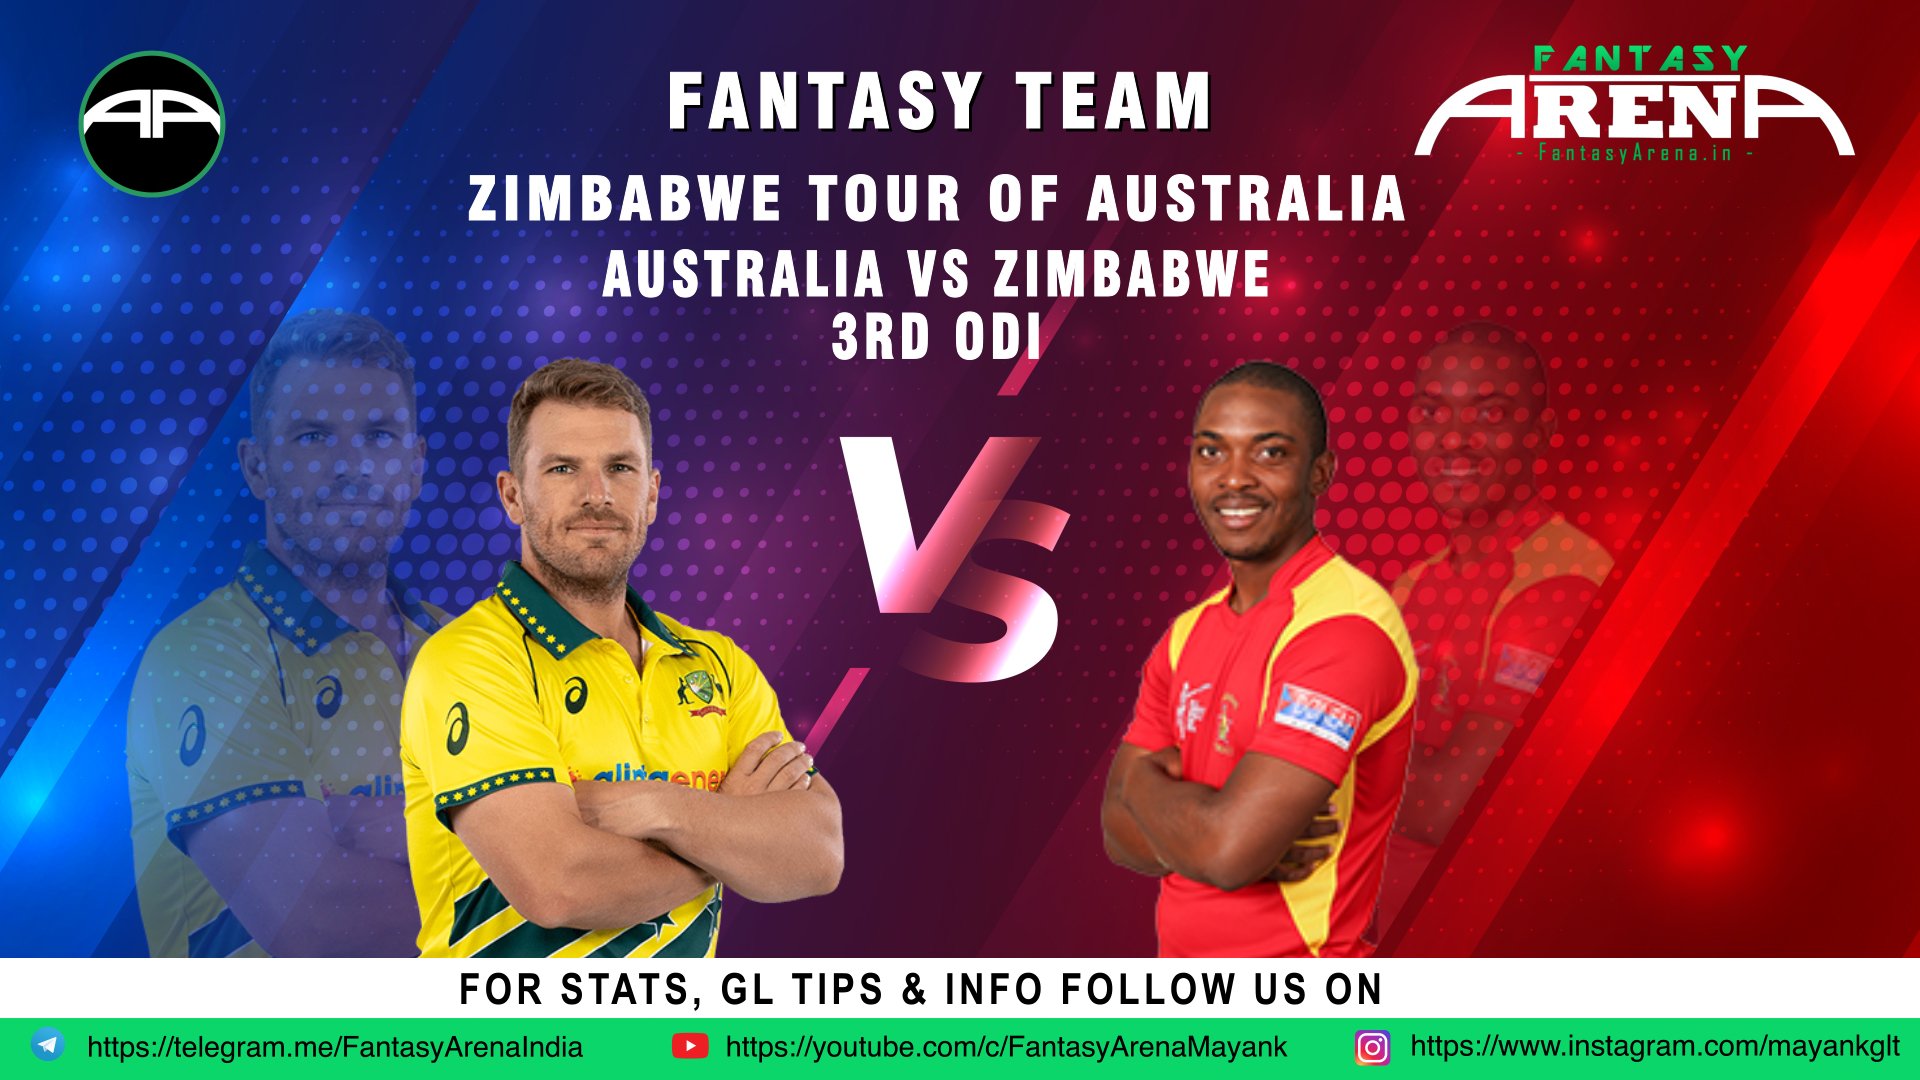 zimbabwe tour of australia 2020